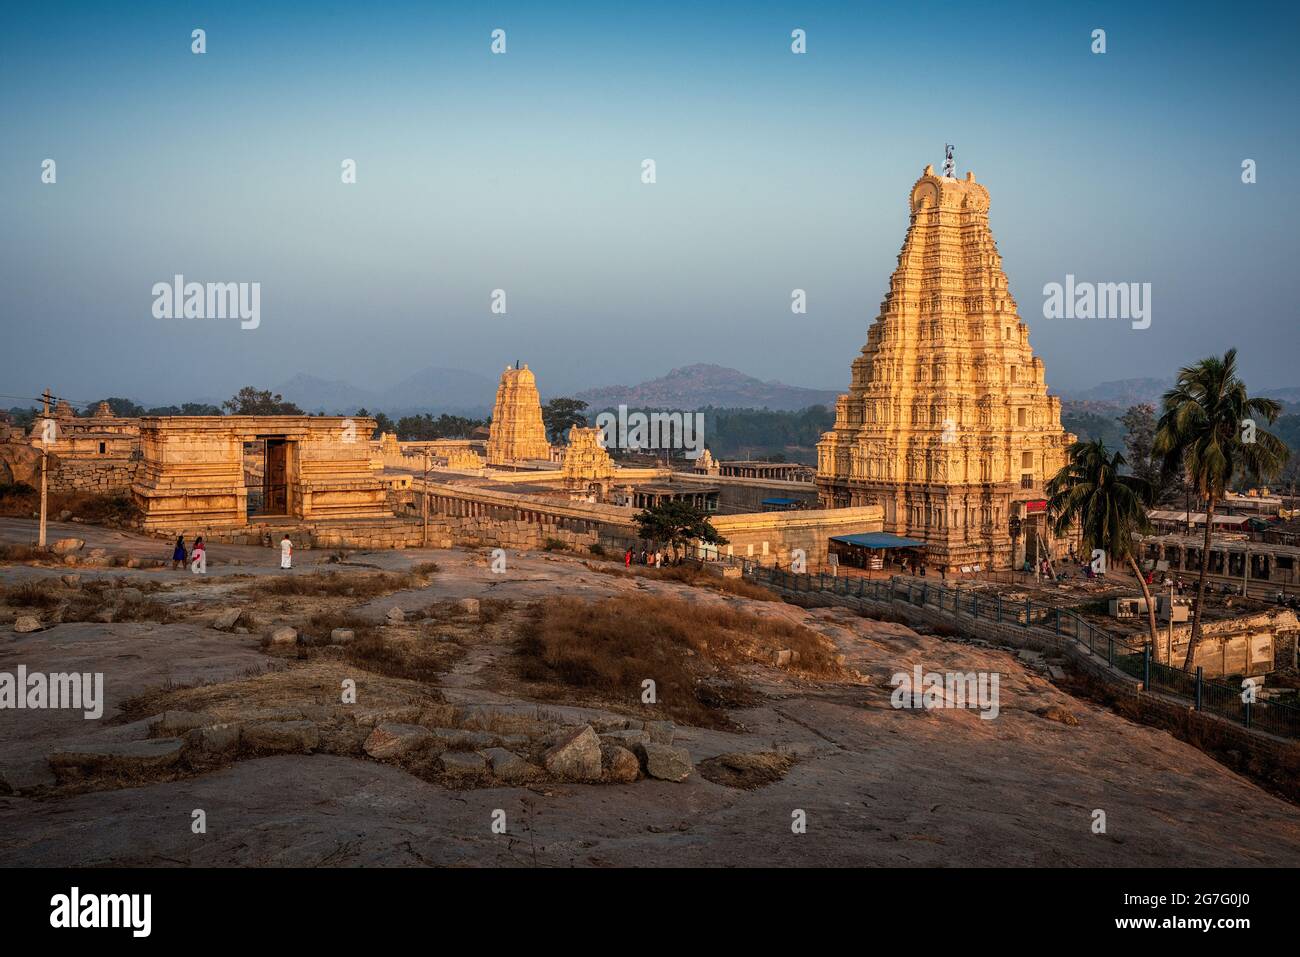 Stunning view at Sree Virupaksha Temple, located in the ruins of ancient city Vijayanagar at Hampi, it is UNESCO World Heritage Site. Karnataka, India Stock Photo